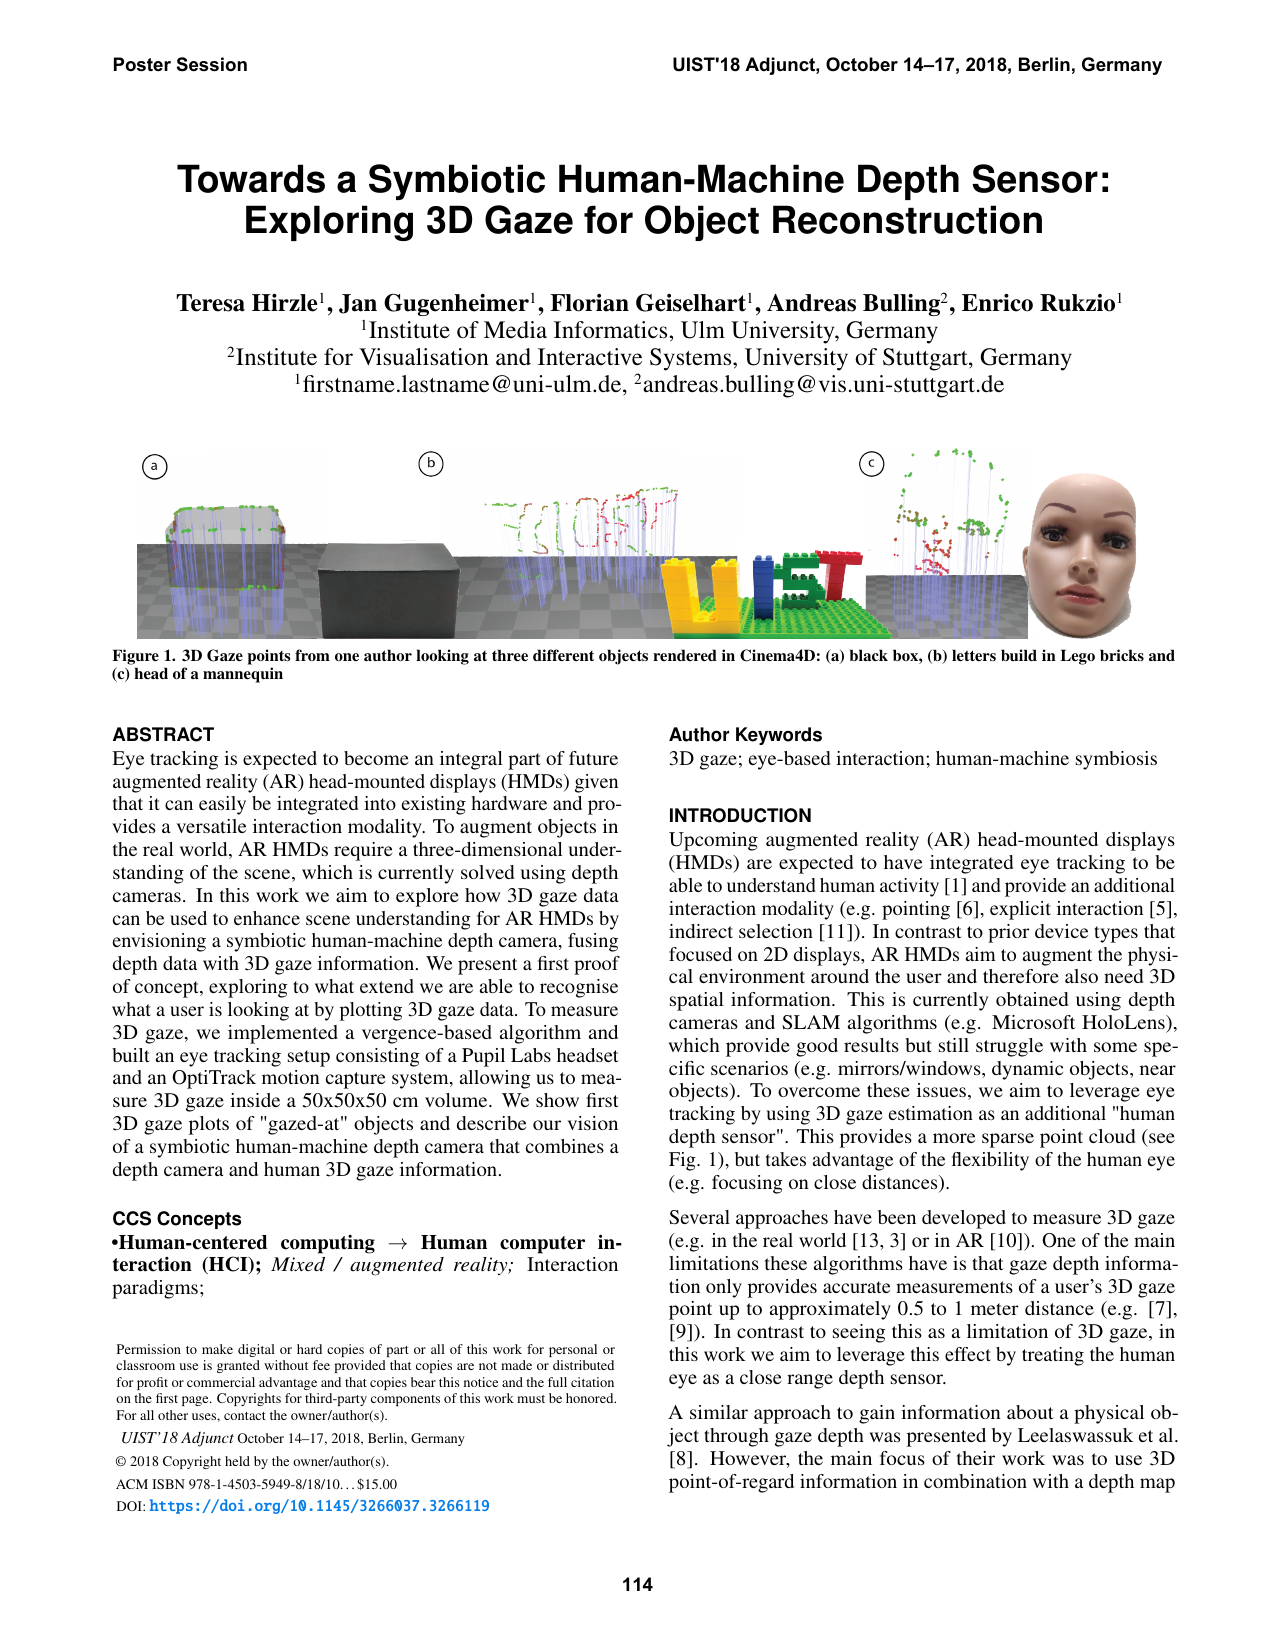 Towards a Symbiotic Human-Machine Depth Sensor: Exploring 3D Gaze for Object Reconstruction